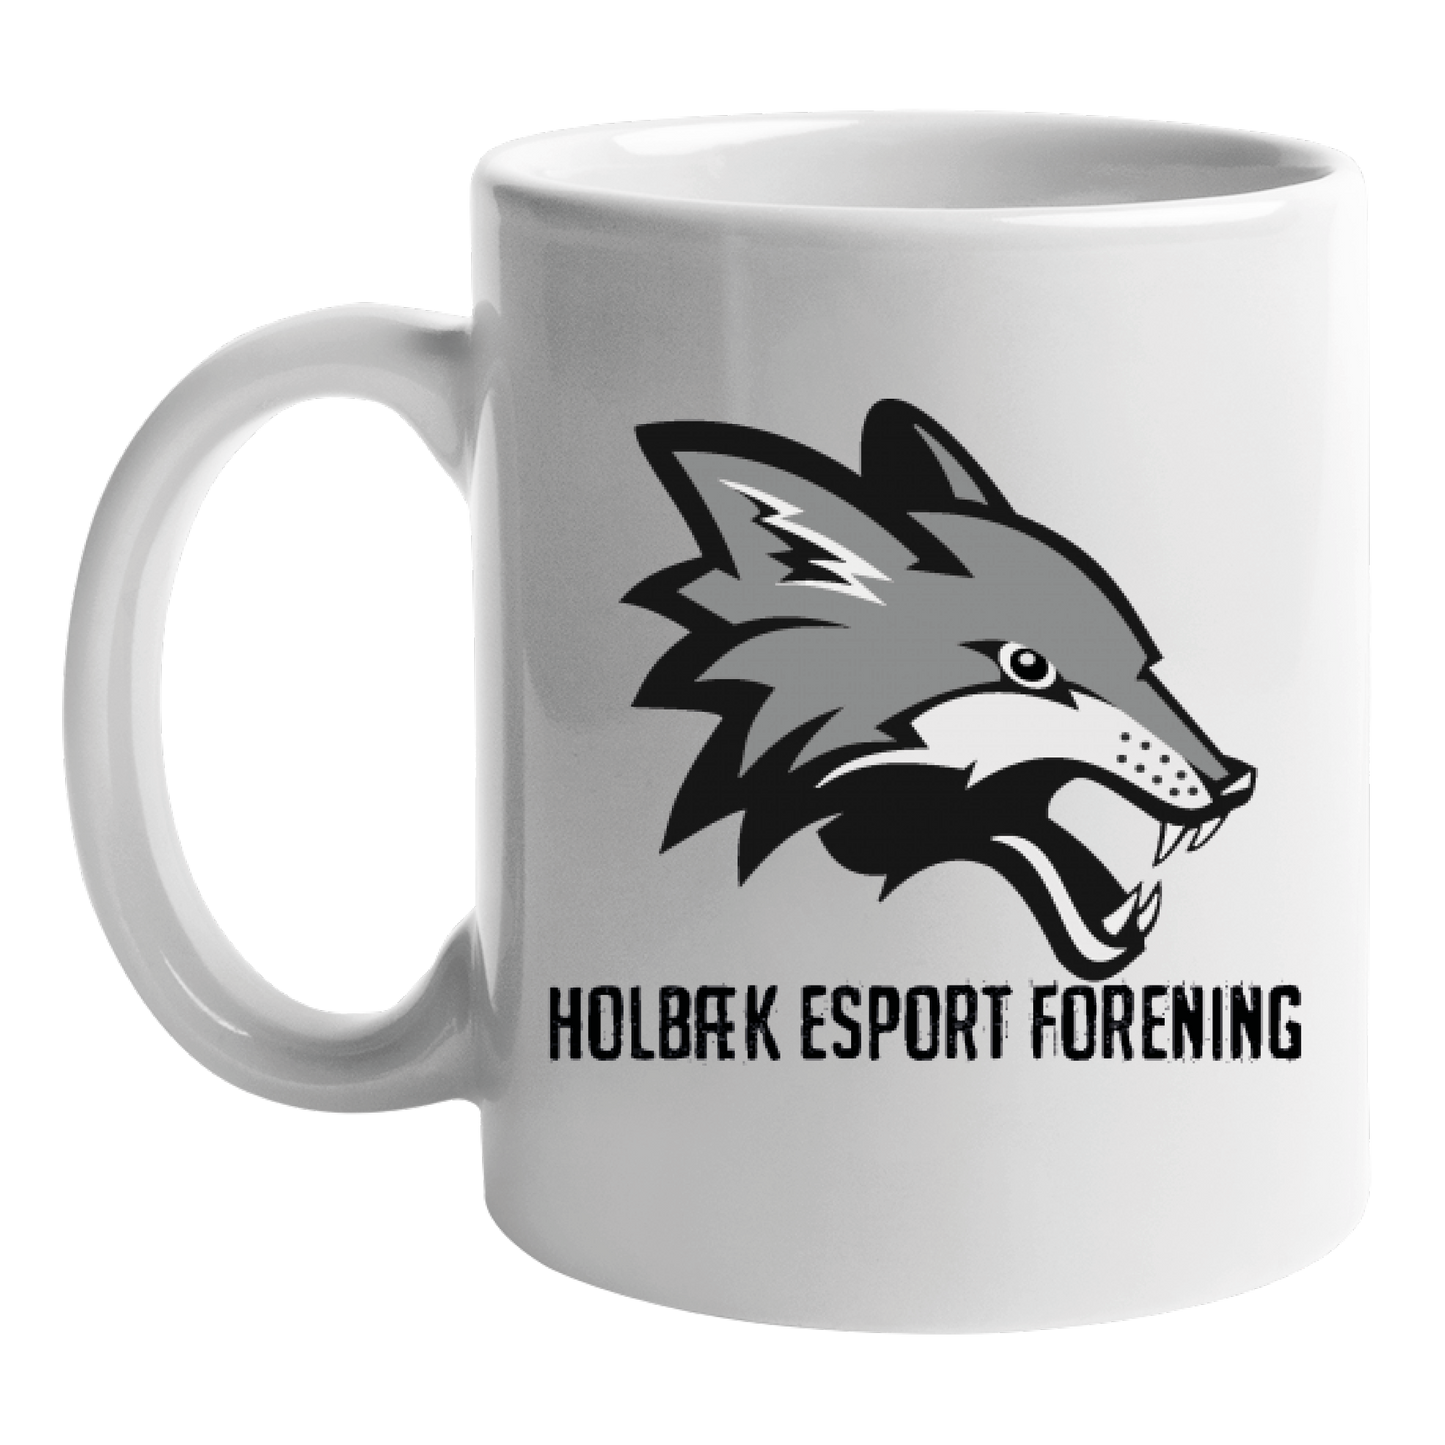 Kop med klub logo - Holbæk ESport